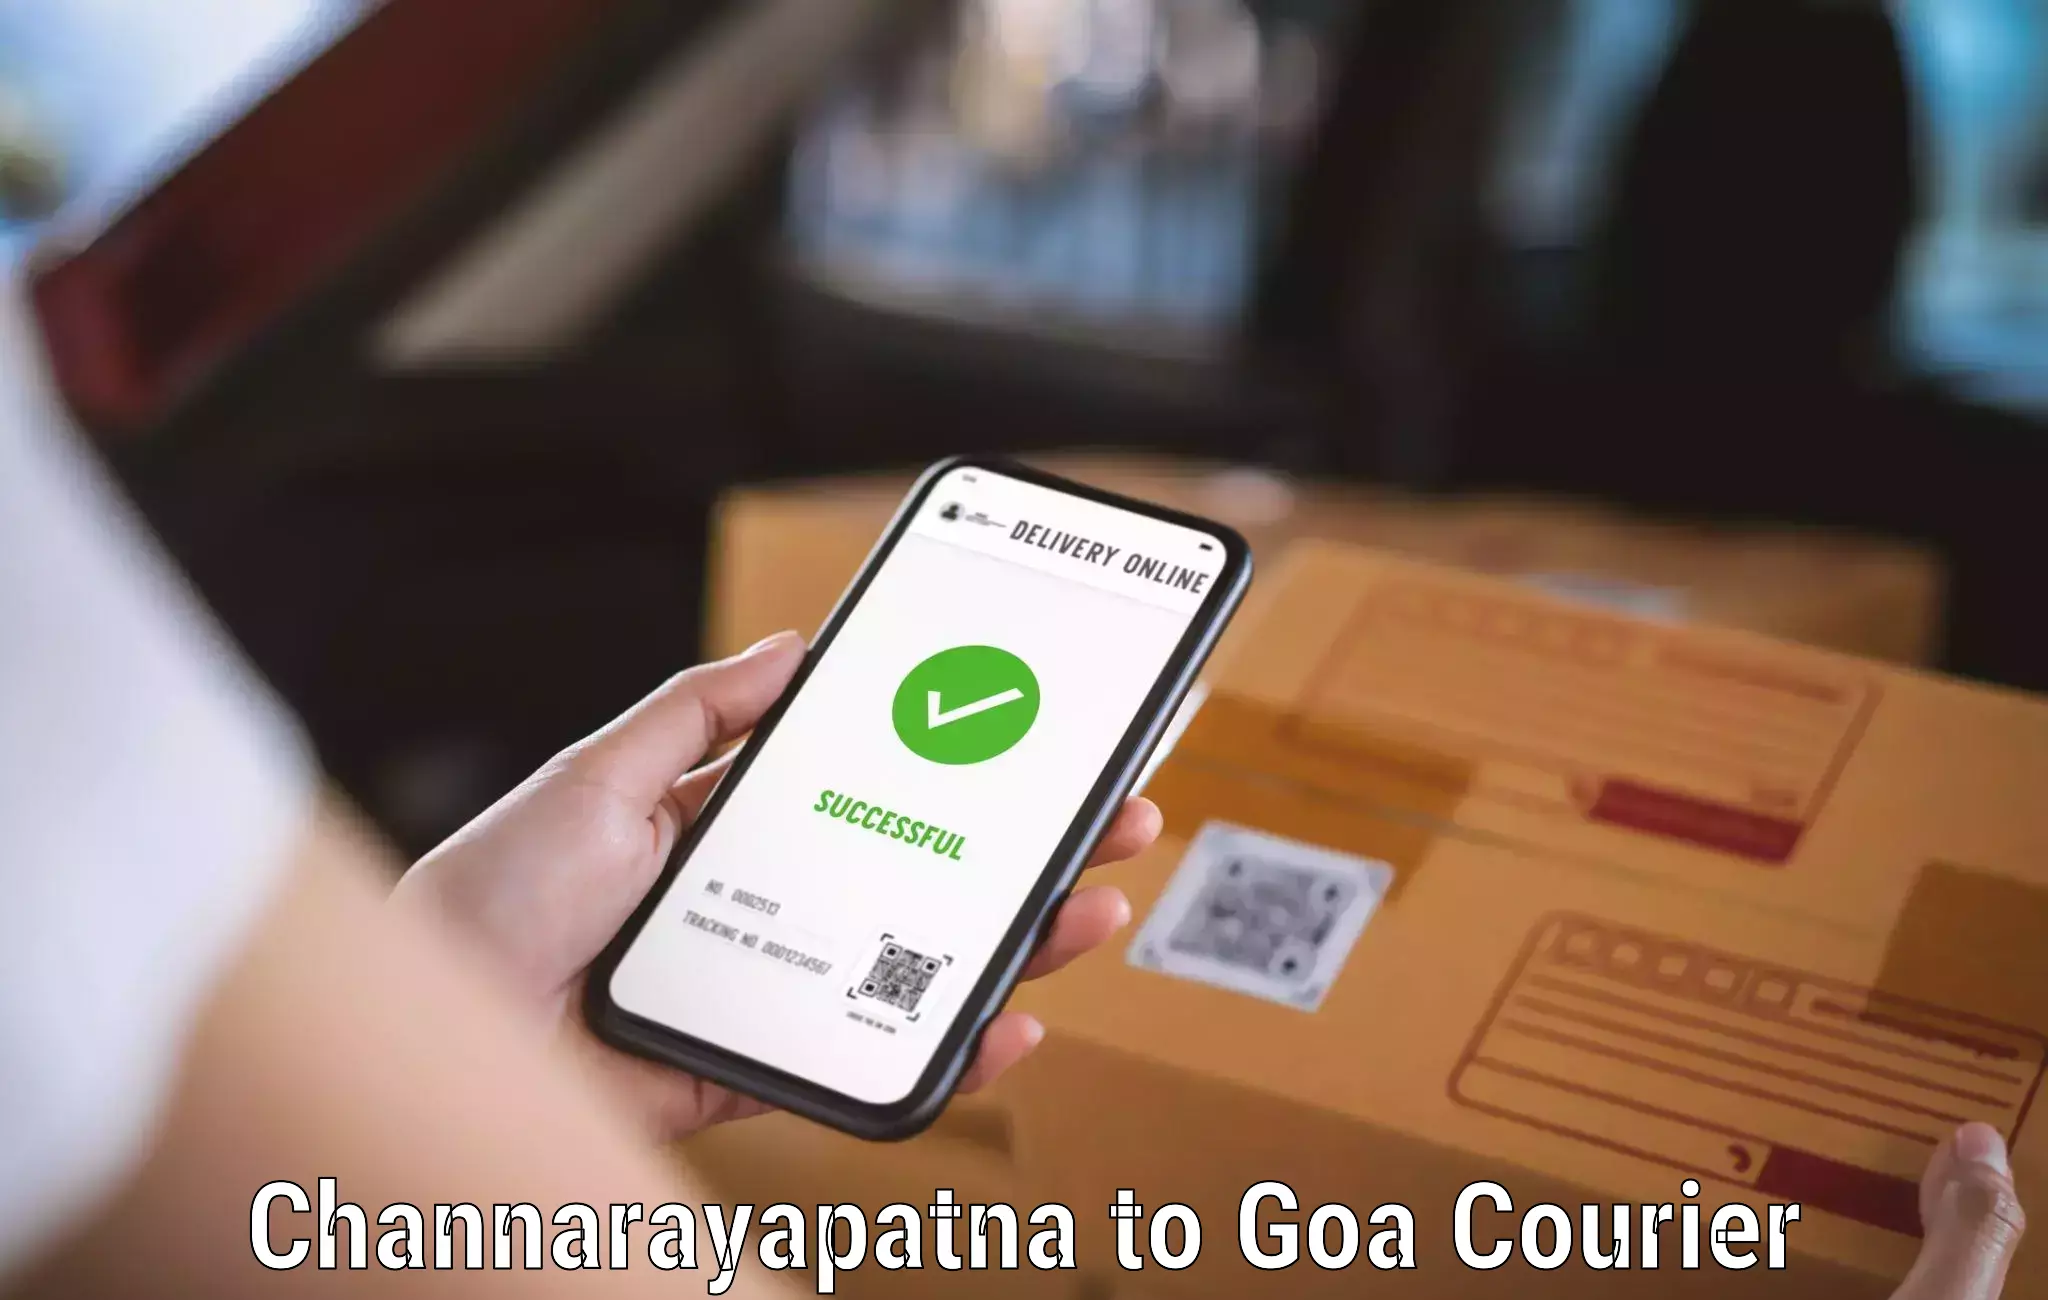 Global shipping networks Channarayapatna to NIT Goa